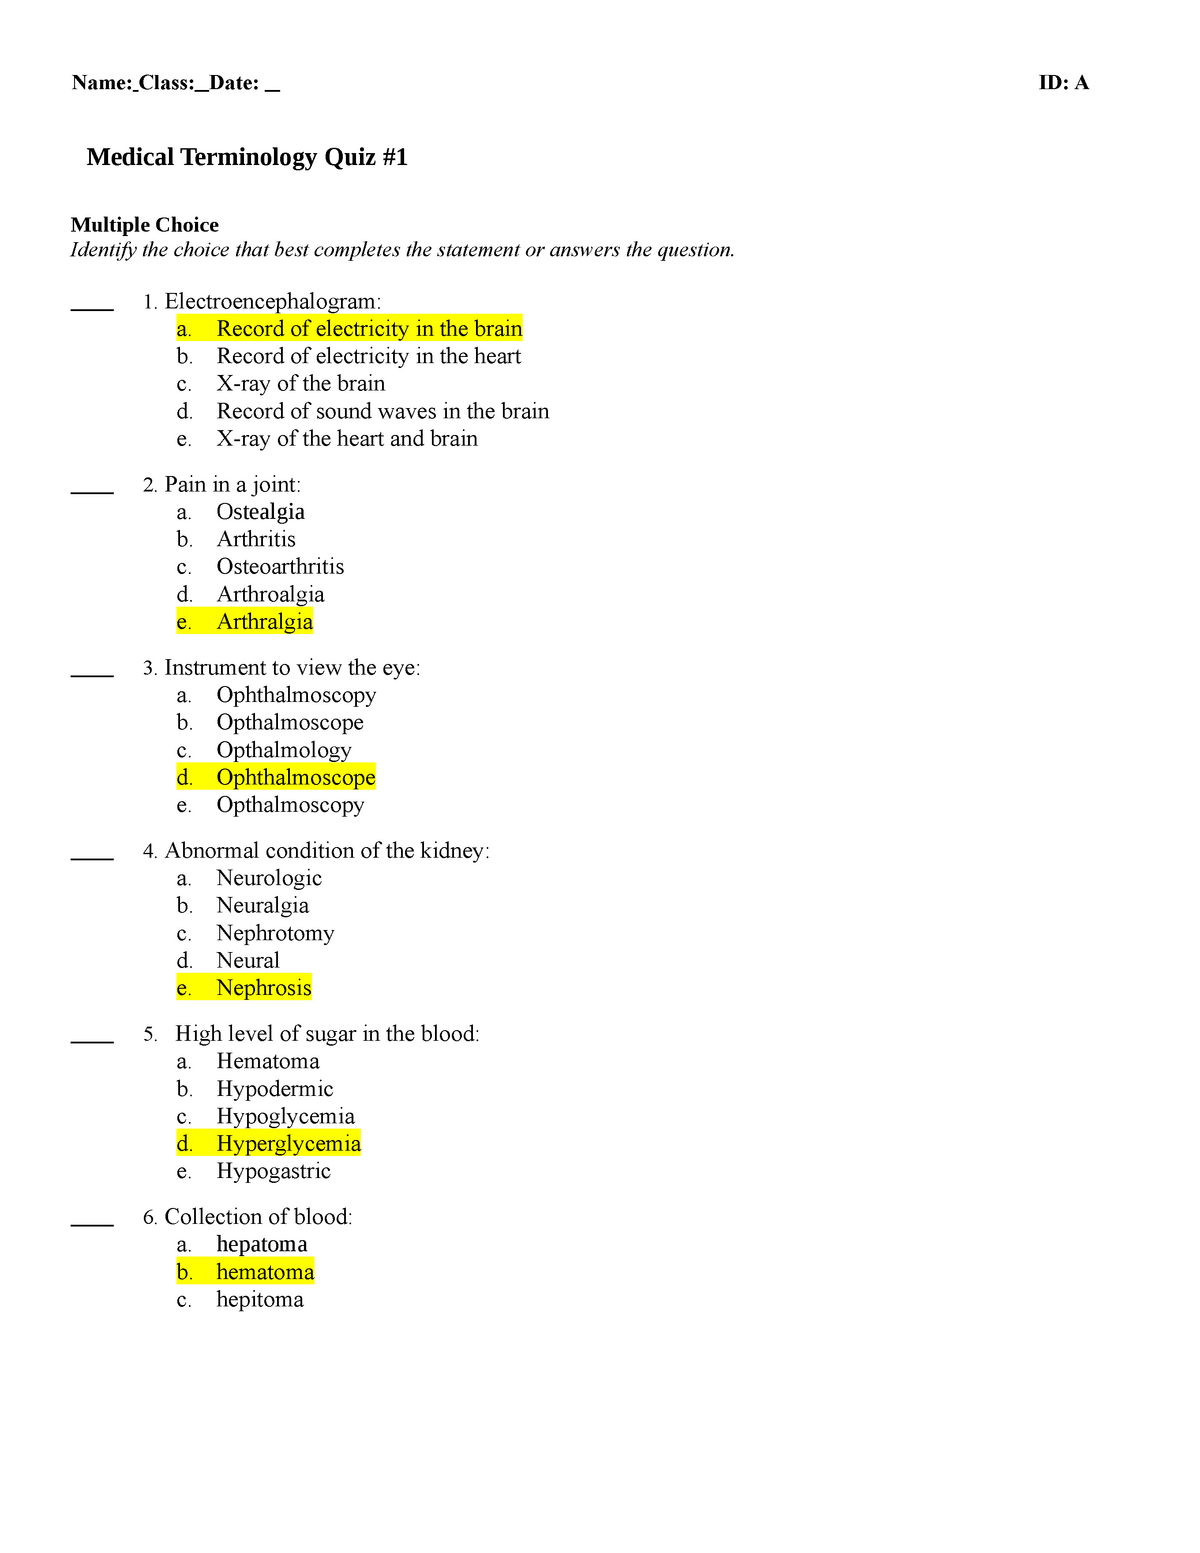 medical-terminology-quiz-1-student-medical-terminology-quiz-multiple